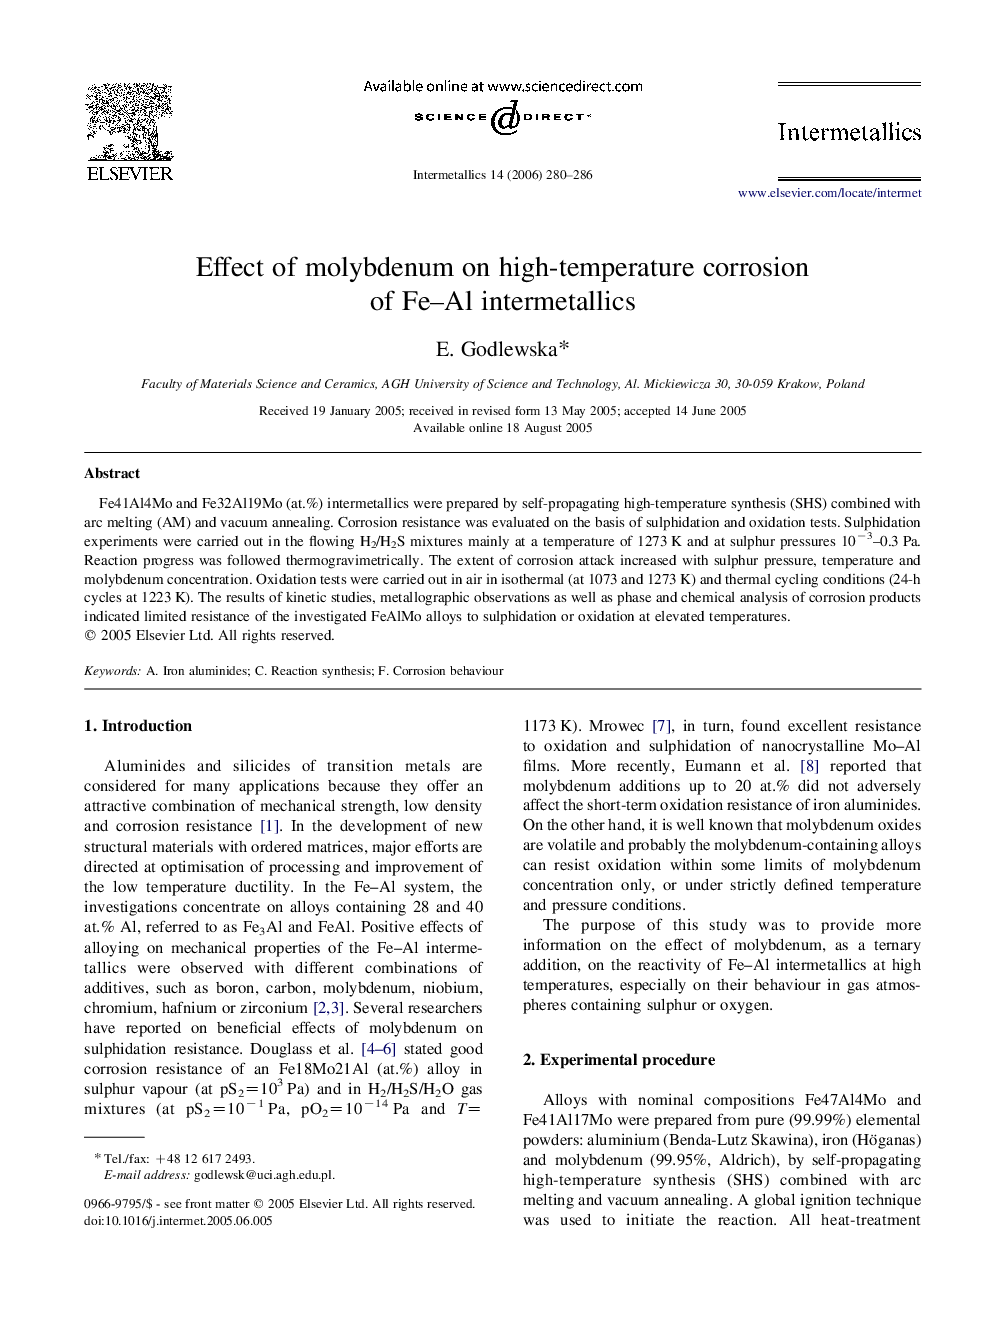 Effect of molybdenum on high-temperature corrosion of Fe–Al intermetallics